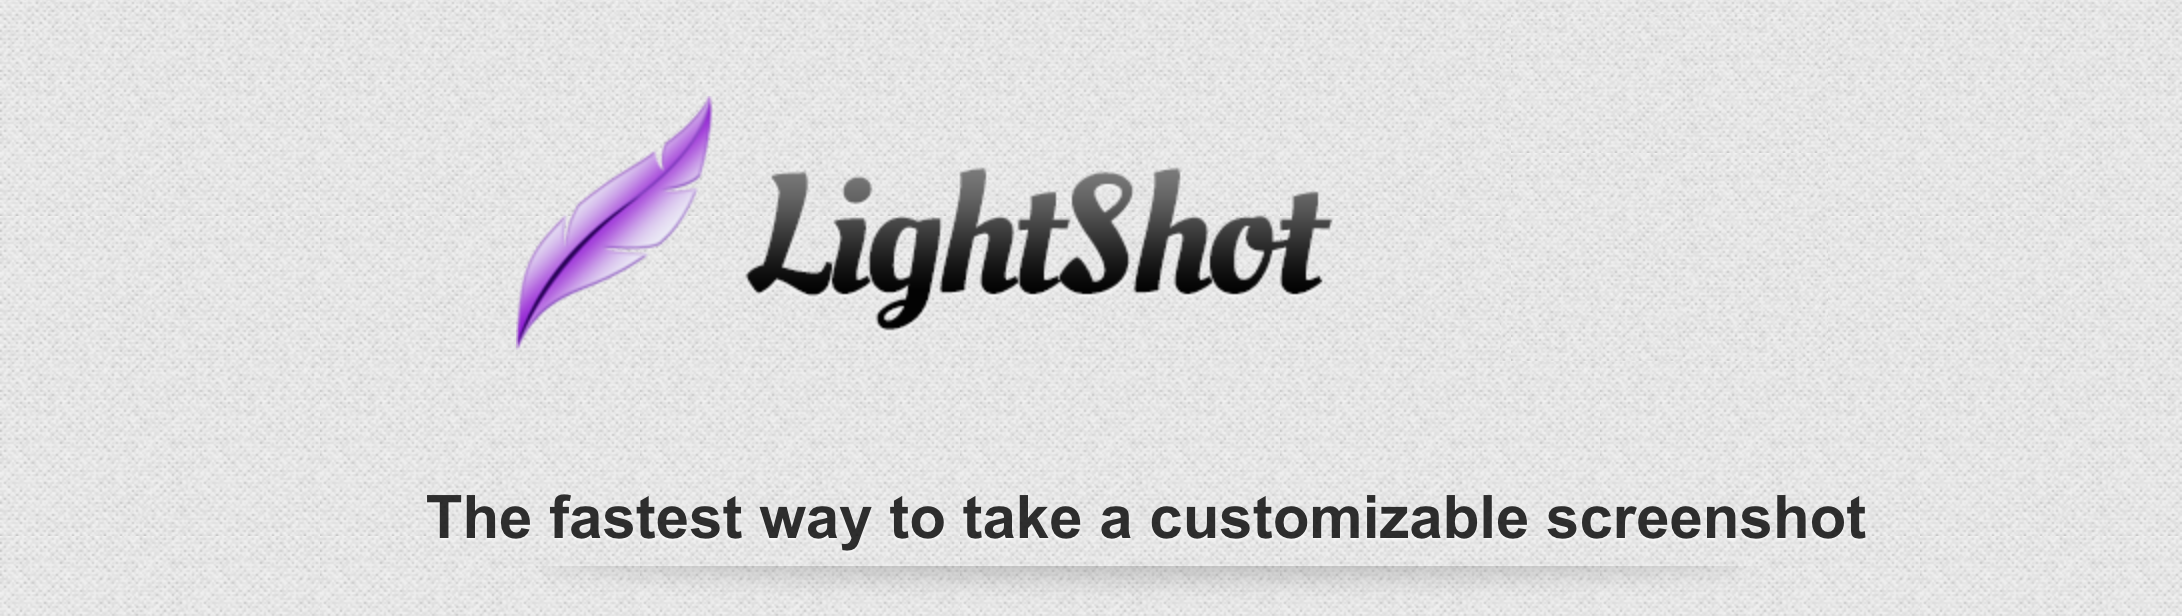 Lightshot. Lightshot логотип. Lightshot ярлык. Программа Lightshot. Xzxc3 https a9fm github io lightshot